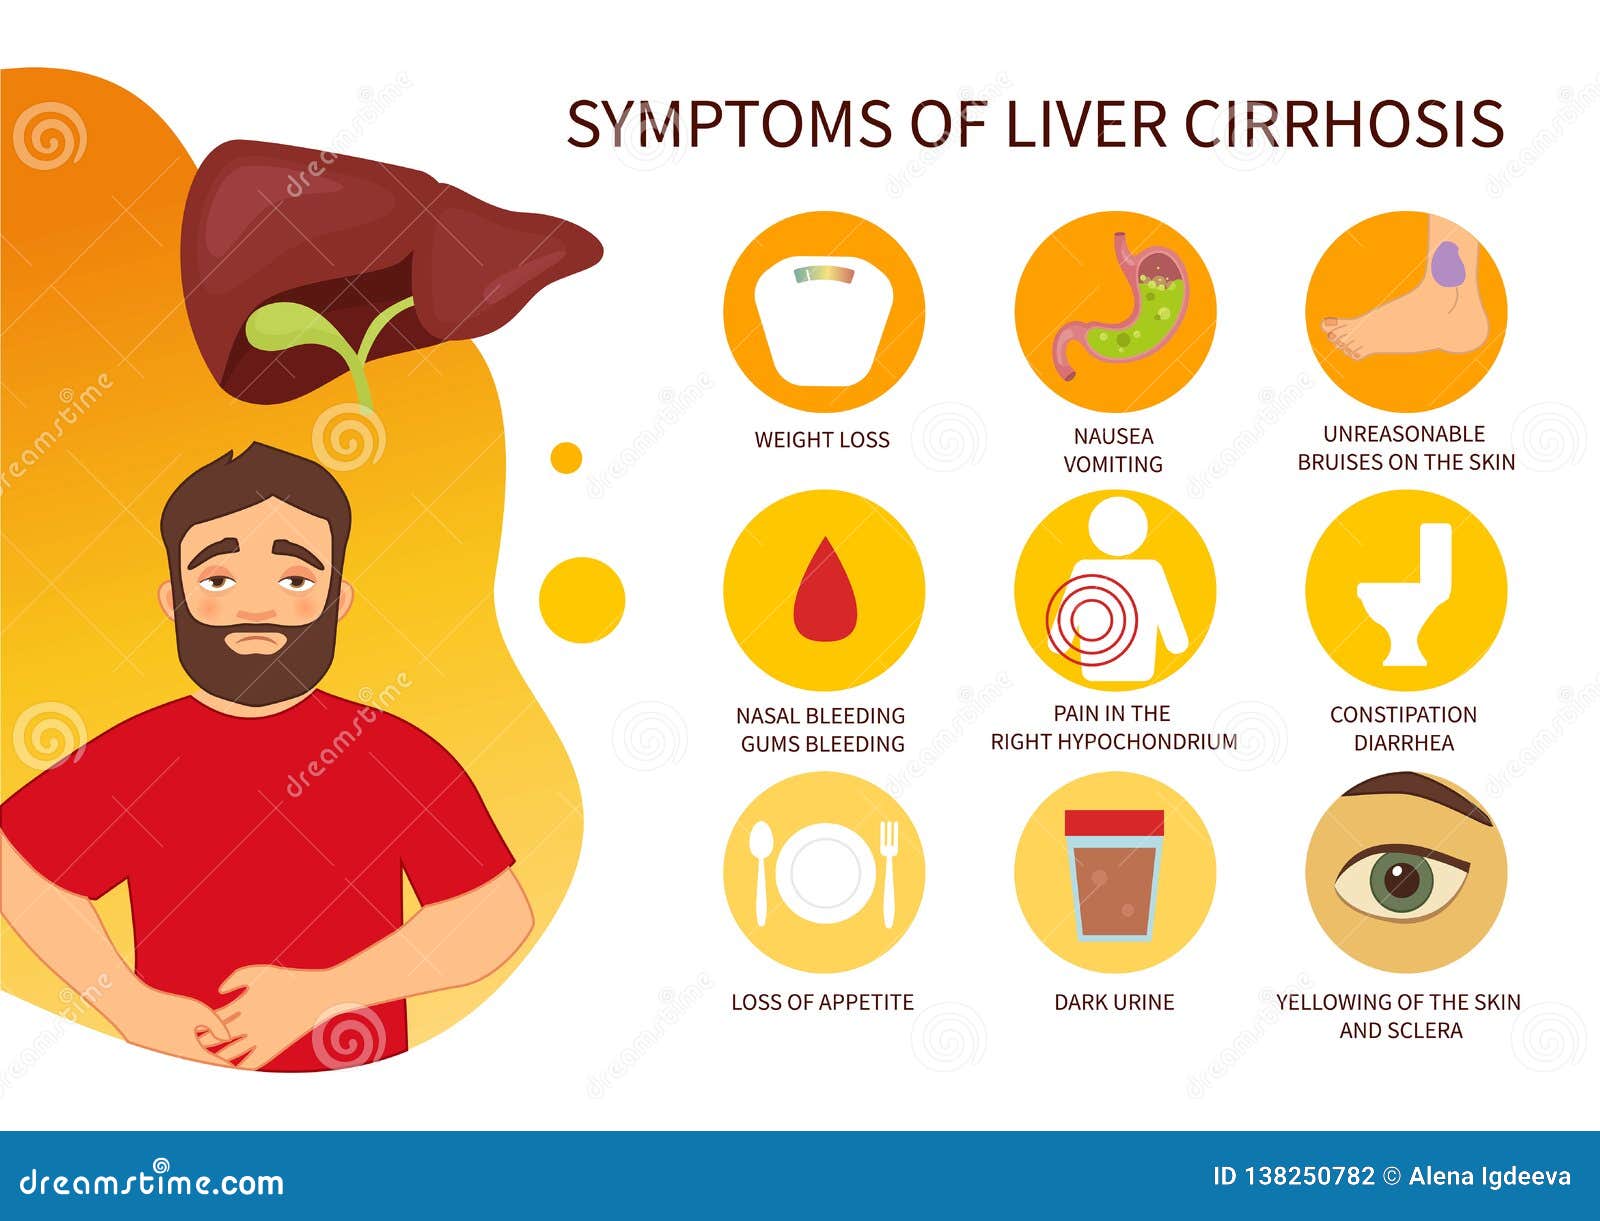  poster of liver cirrhosis symptoms.